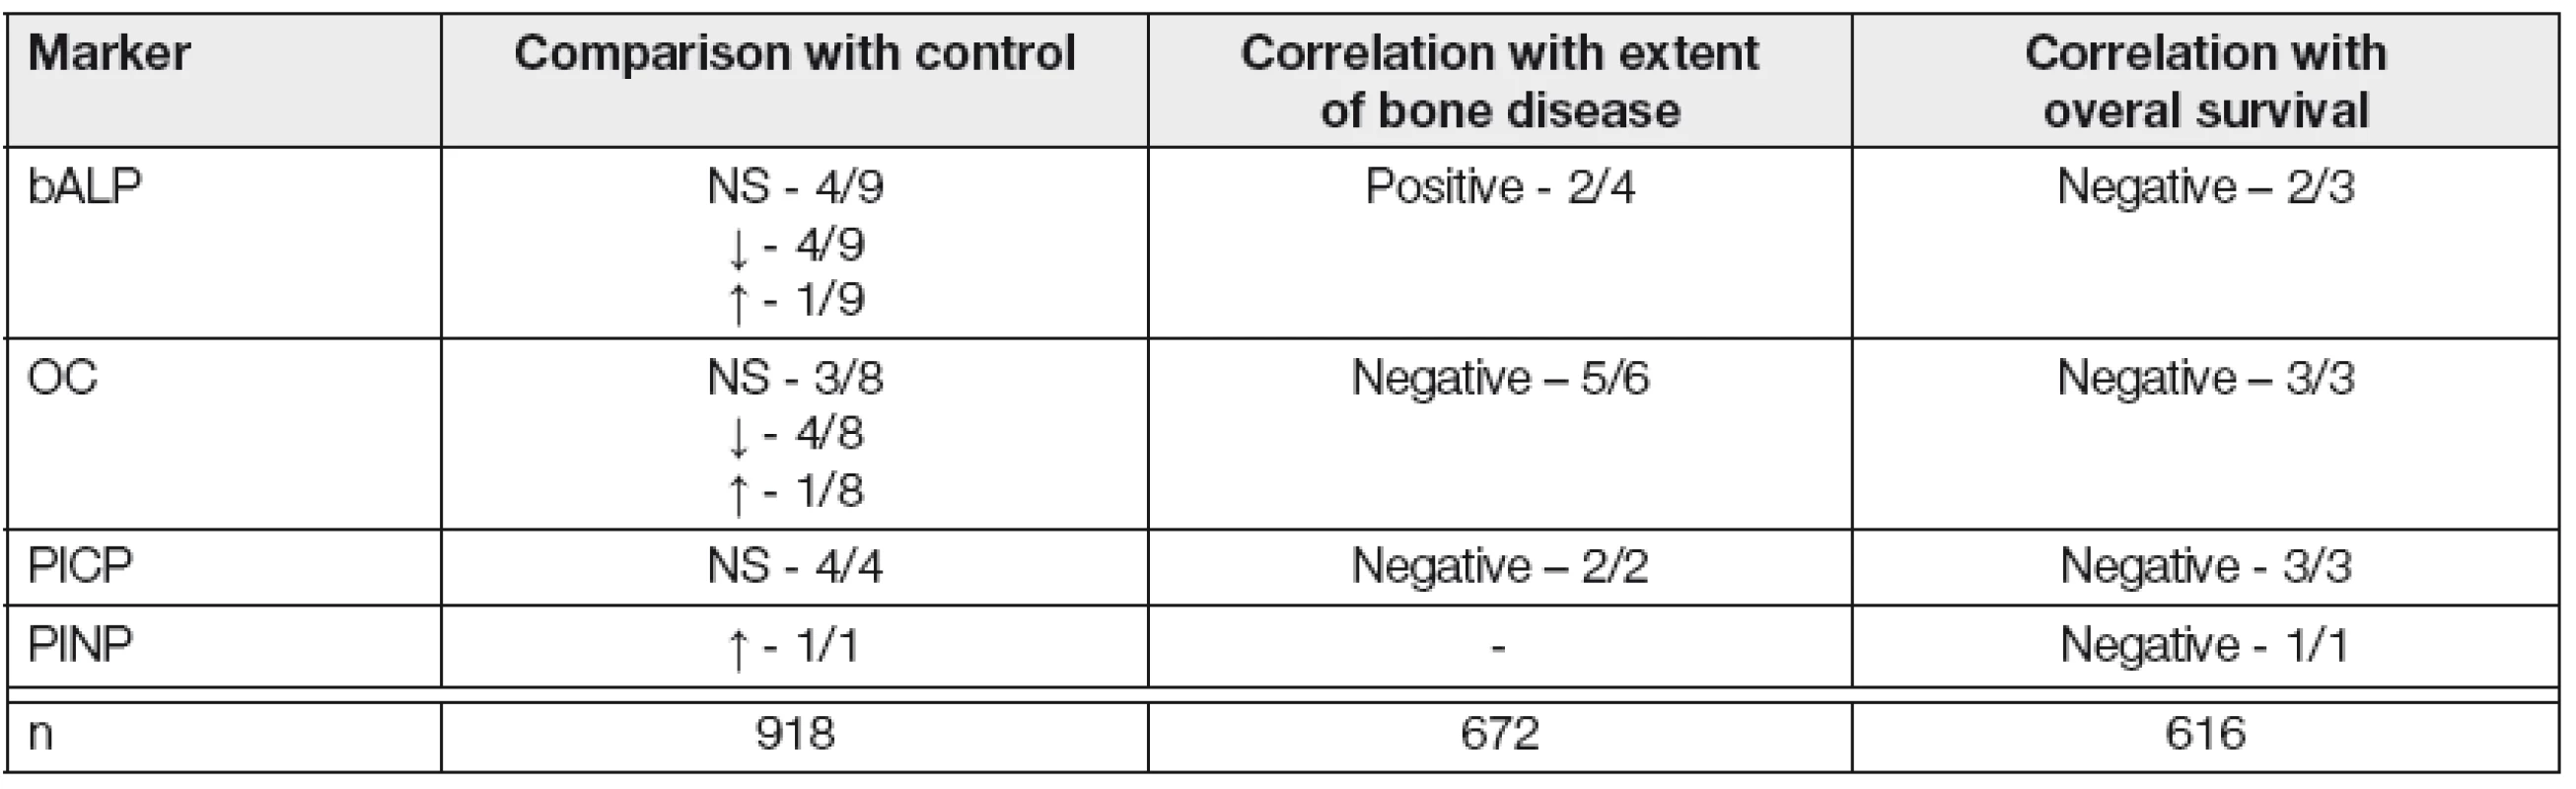 Myeloma bone disease- eleven publication analysis (1996-2010) of markers of bone formation (14)